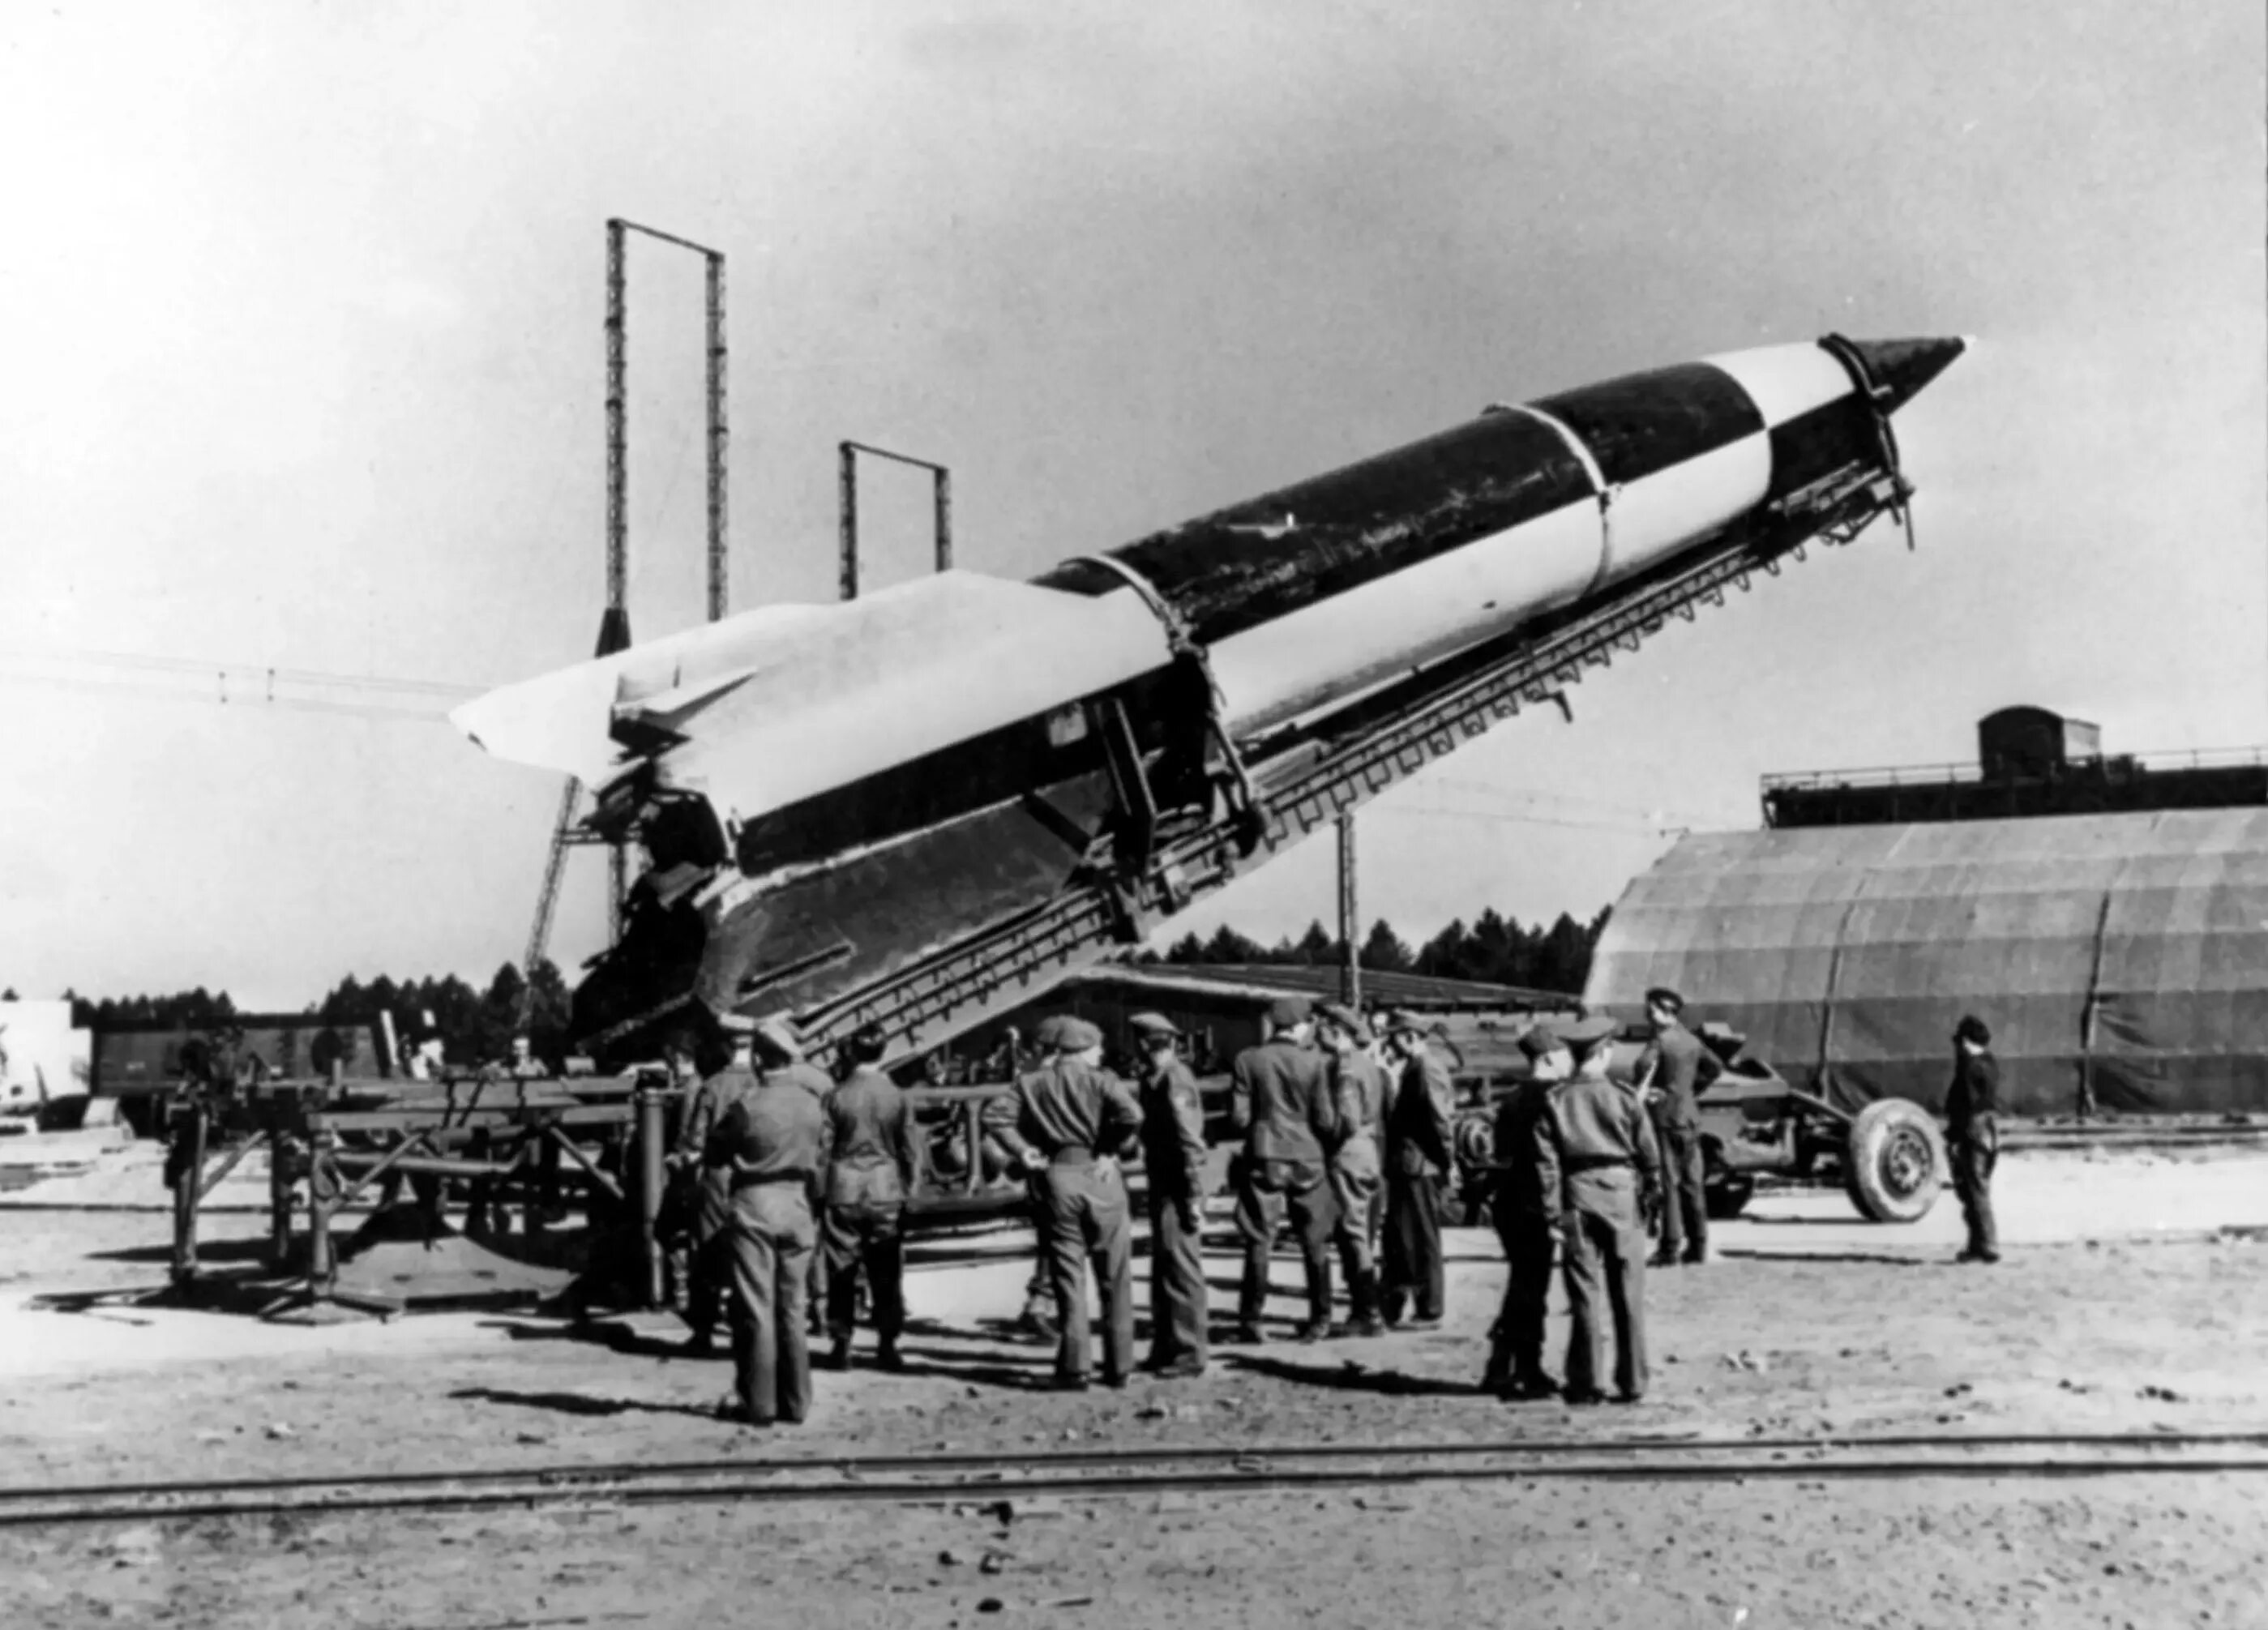 Самая первая баллистическая ракета. ФАУ-2 баллистическая ракета. ФАУ-1 баллистическая ракета. Немецкая баллистическая ракета ФАУ-2. ФАУ-2 (V-2)ракета ФАУ-2 (V-2).